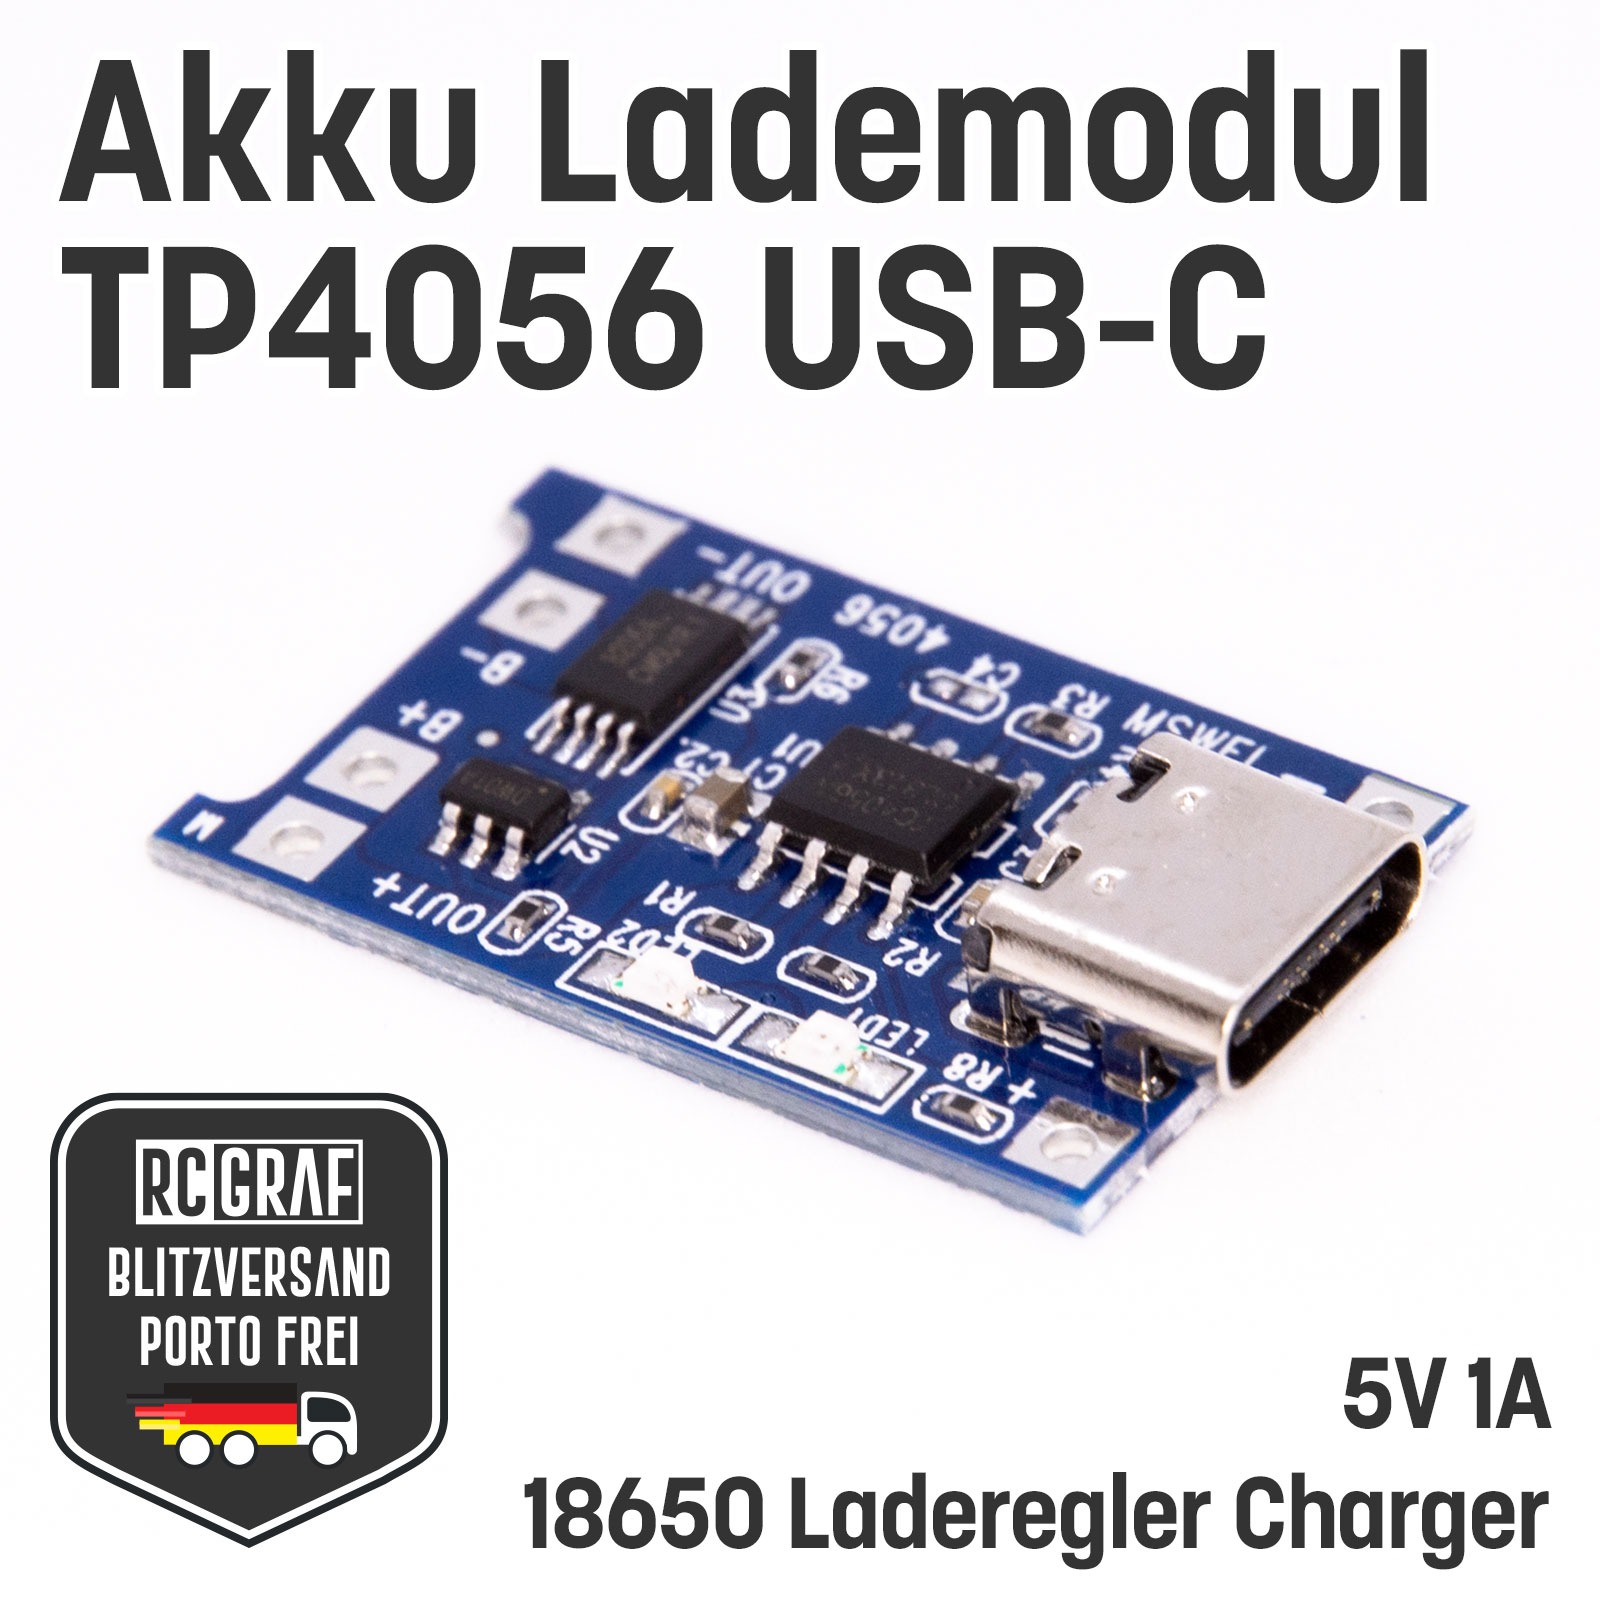 1x Akku Lademodul 5V 1A TP4056 USB C 18650 mit Schutzschaltung